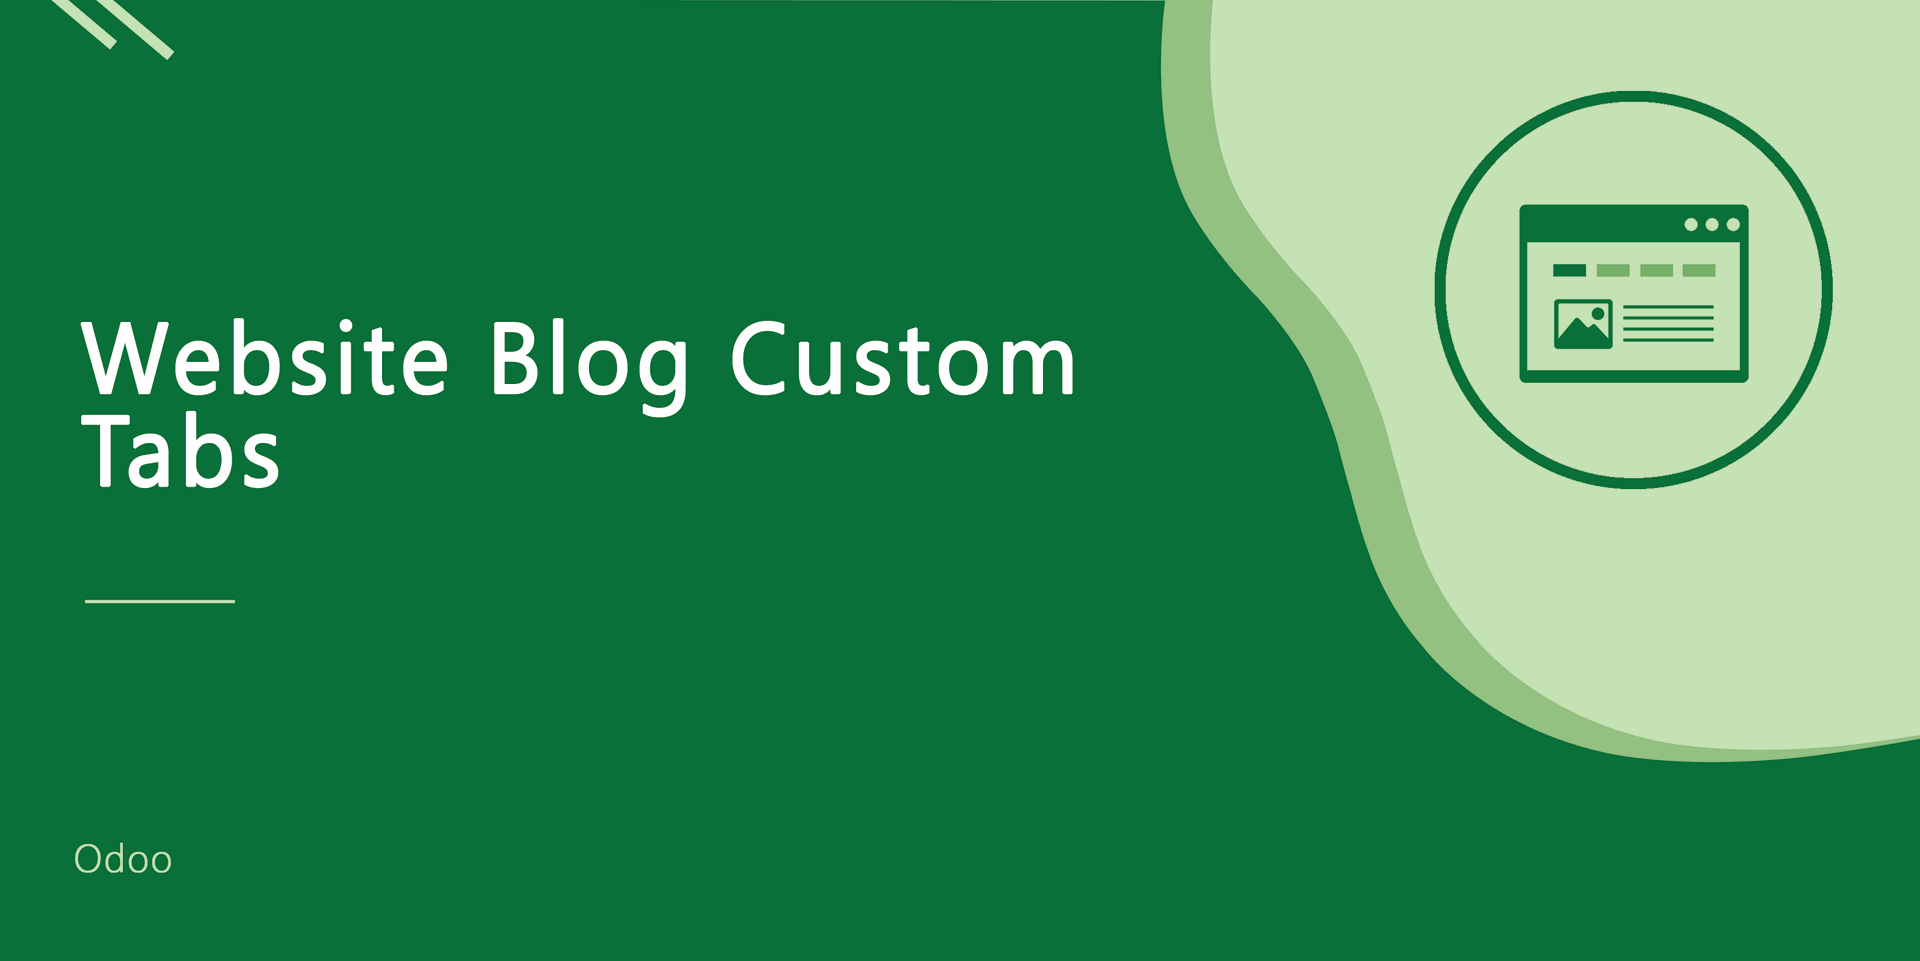 Website Blog Custom Tab
